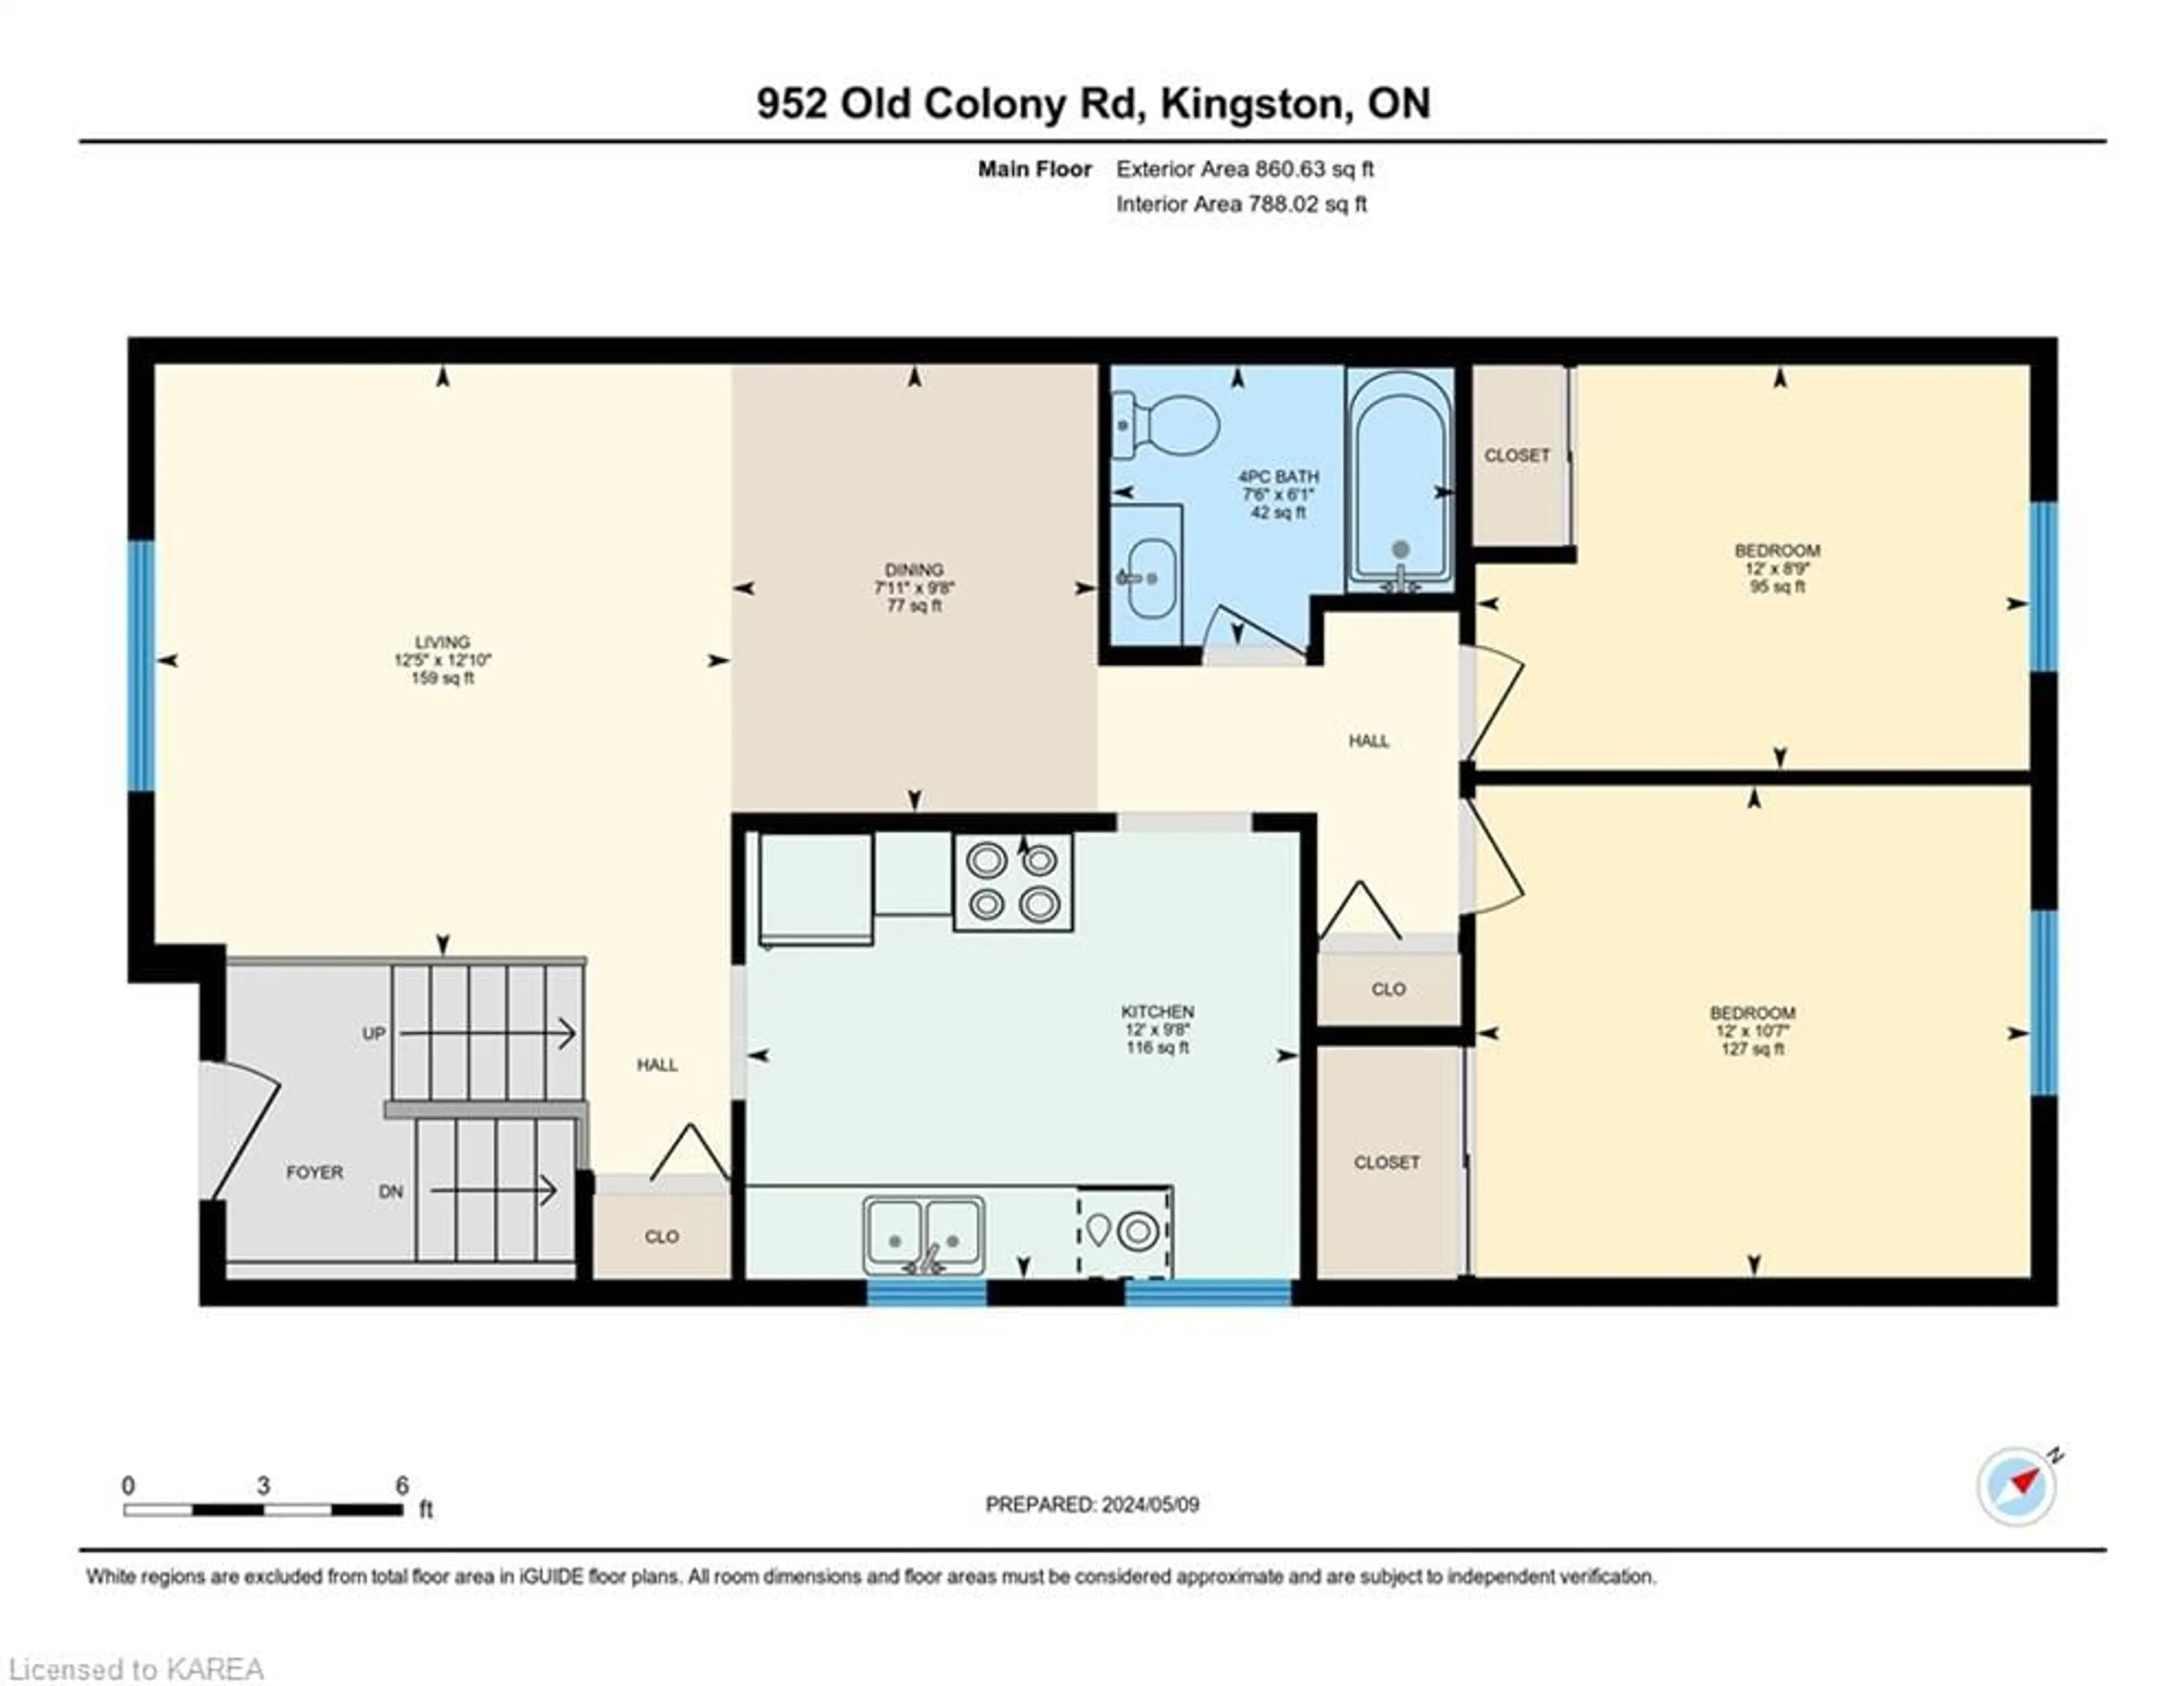 Floor plan for 952 Old Colony Rd, Kingston Ontario K7P 1J7